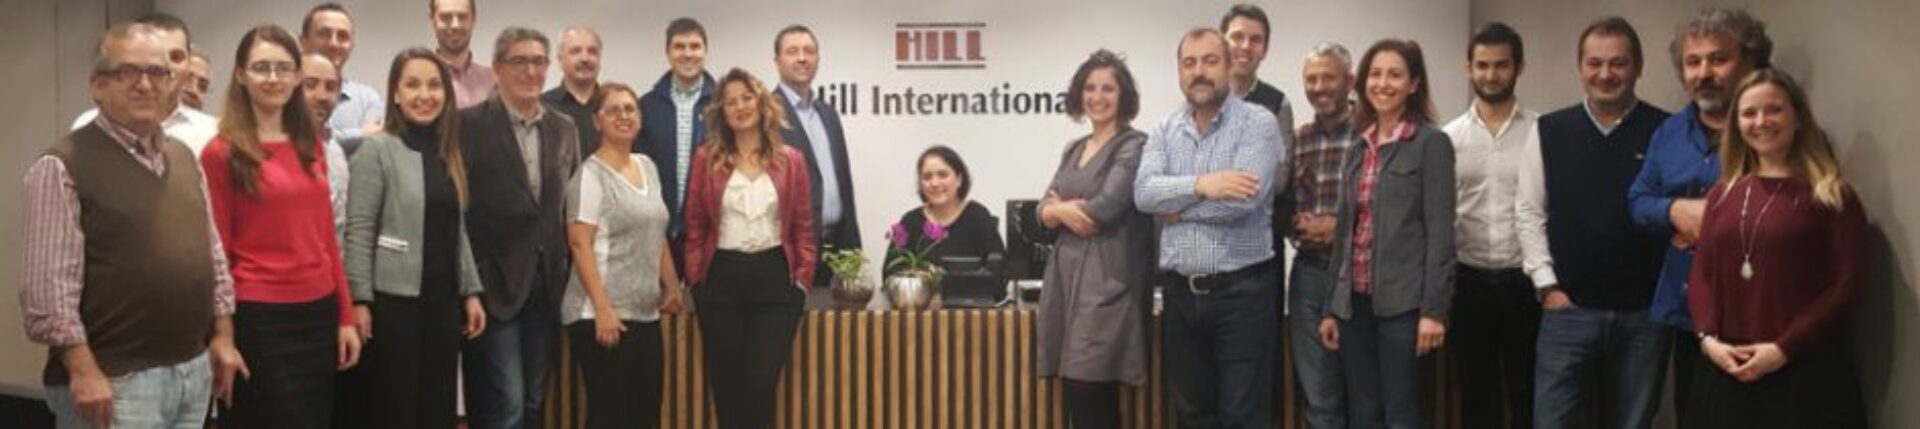 Hill International Announces Rebranding of Turkish Subsidiary IMS header